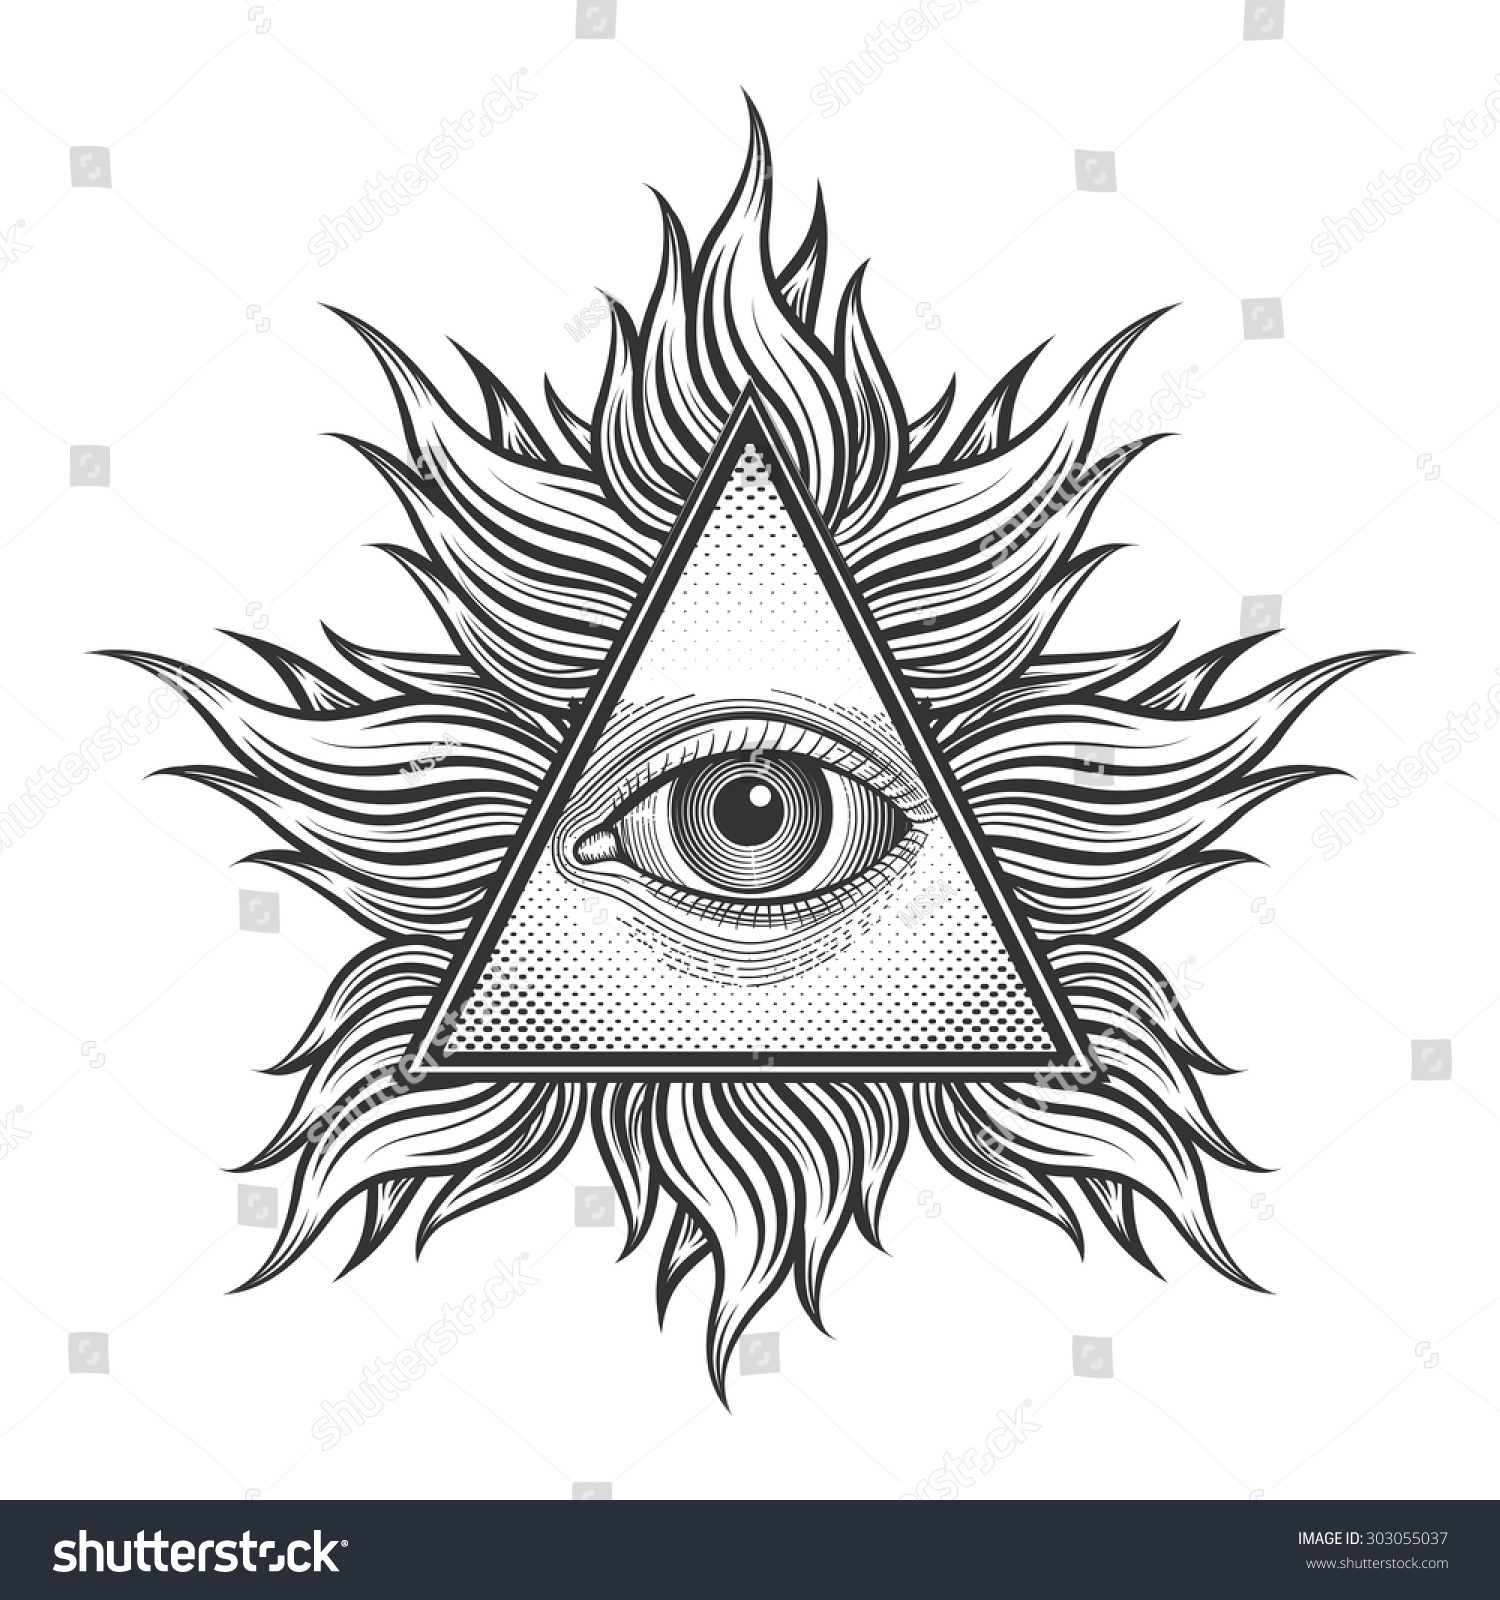 All Seeing Eye Pyramid Symbol In The Engraving Tattoo Style. Freemason ...